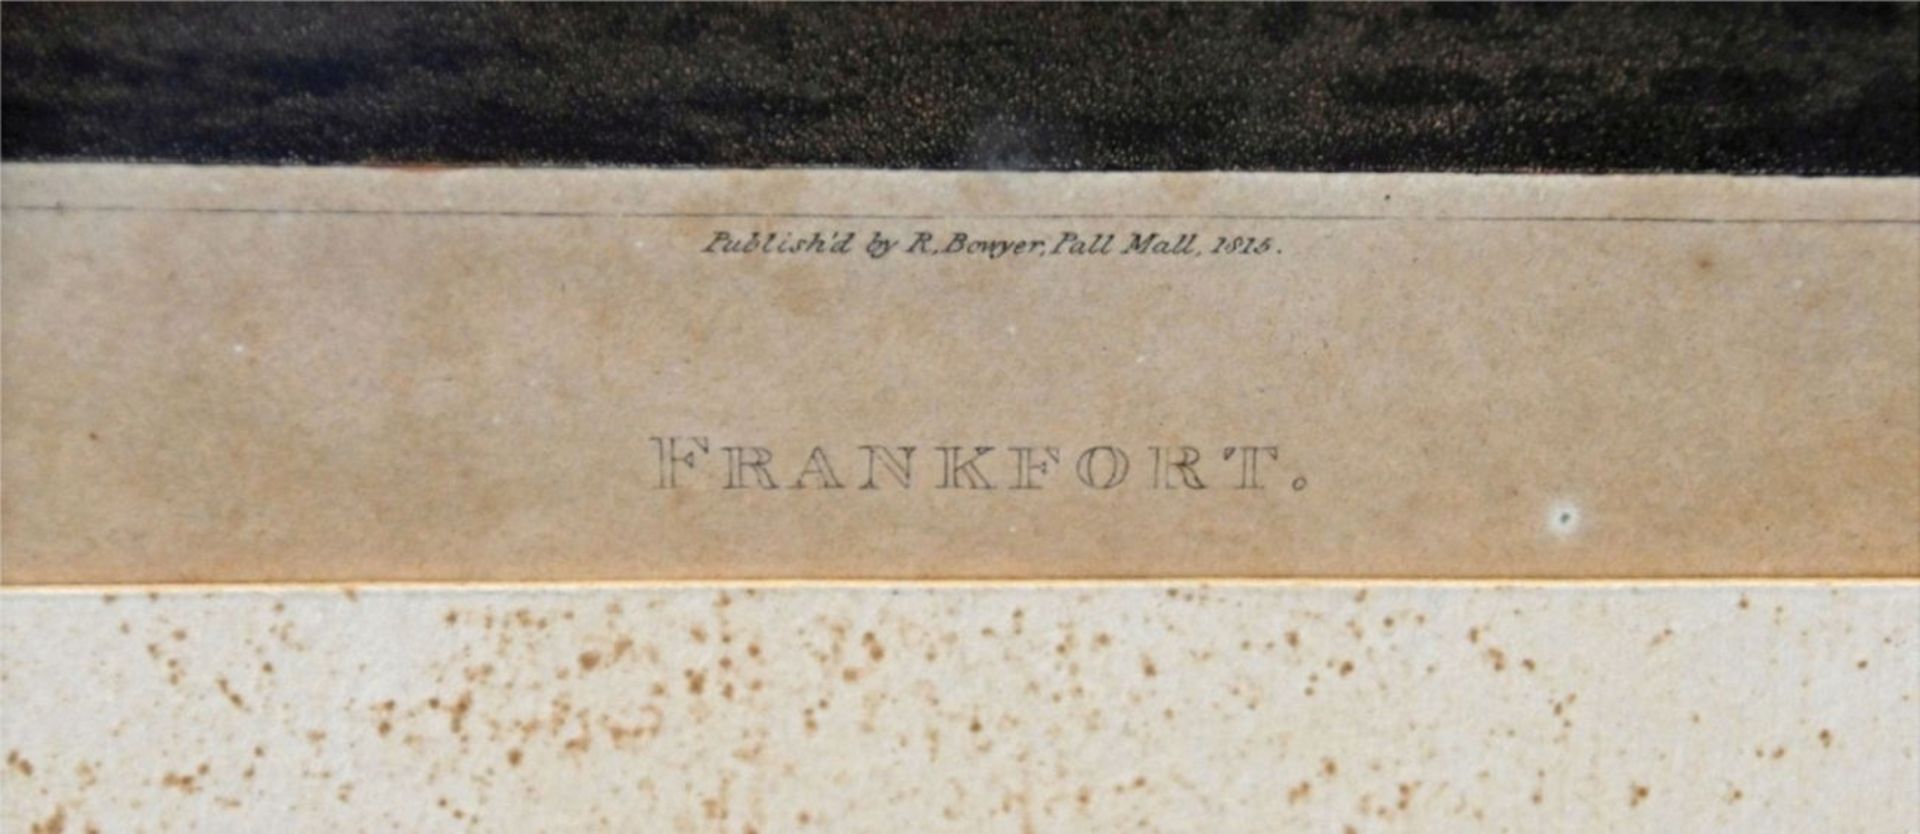 FRANKFURT AM MAIN "Frankfort" - Image 3 of 3